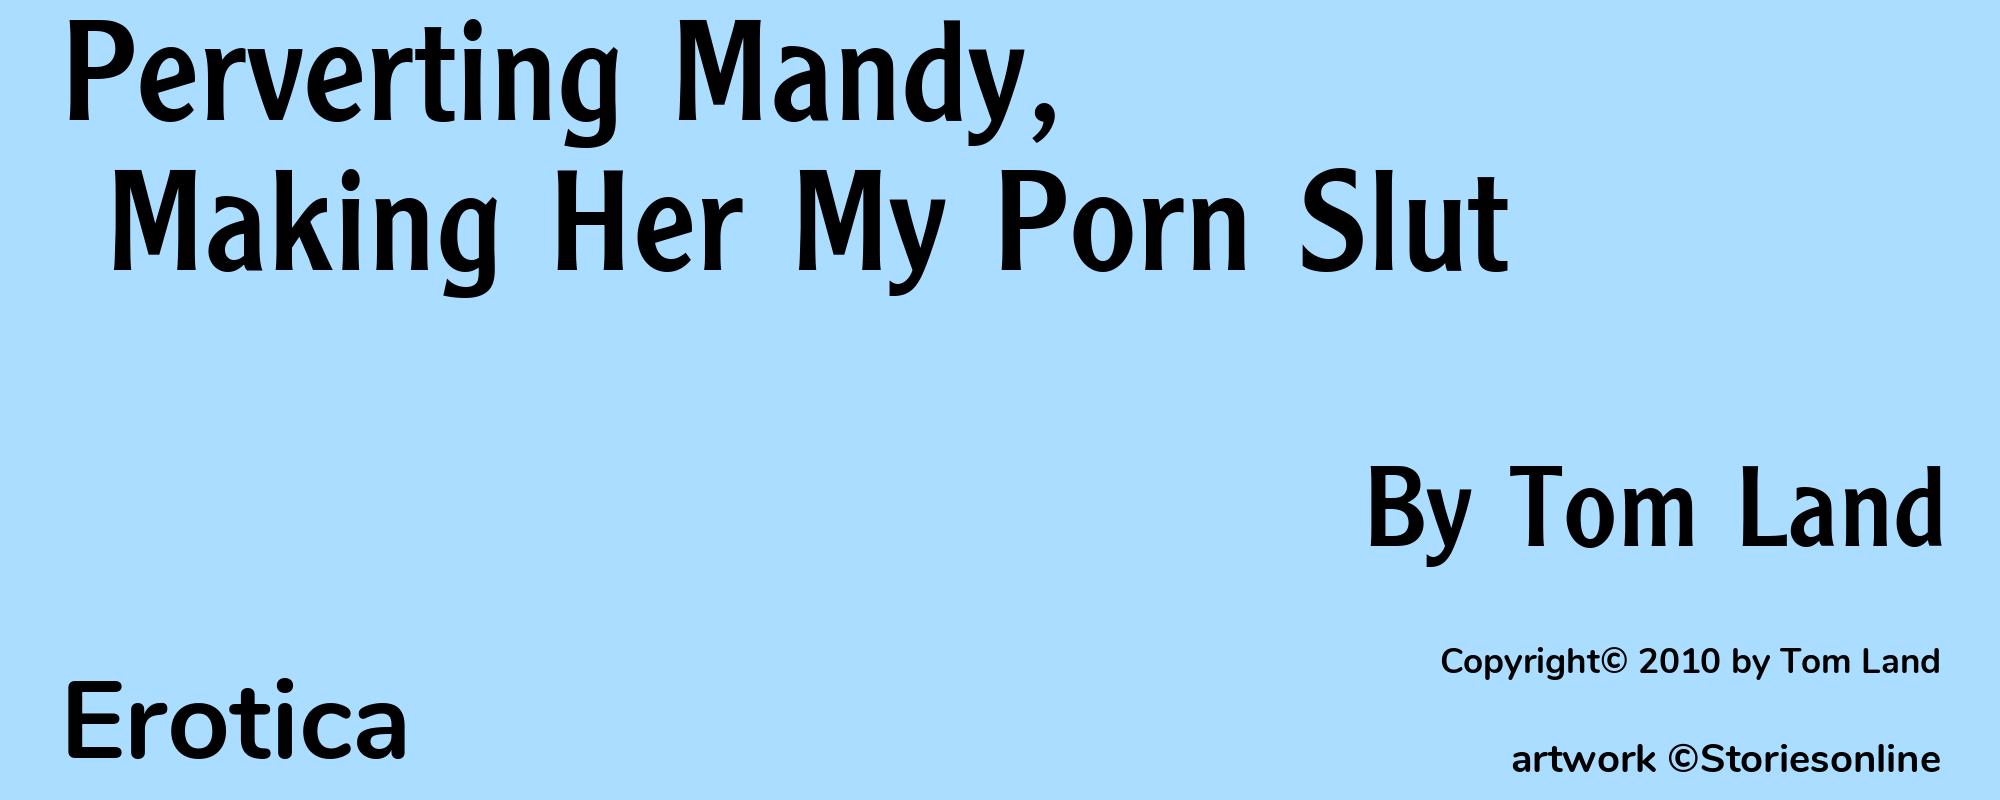 Perverting Mandy, Making Her My Porn Slut - Cover